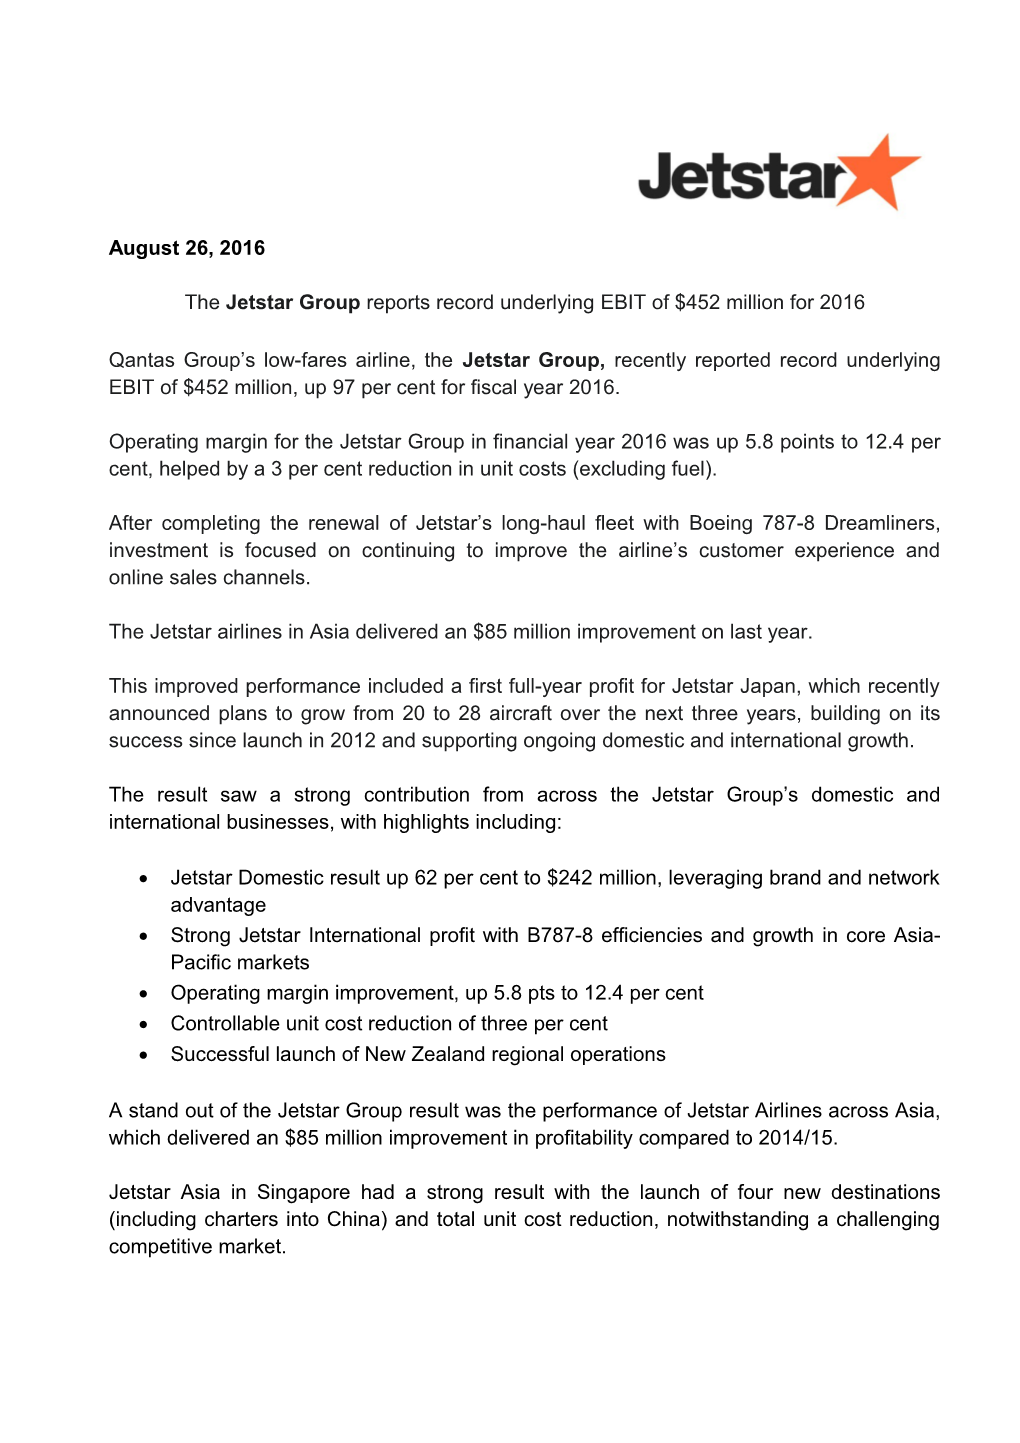 The Jetstar Group Reports Record Underlying EBIT of $452 Million for 2016